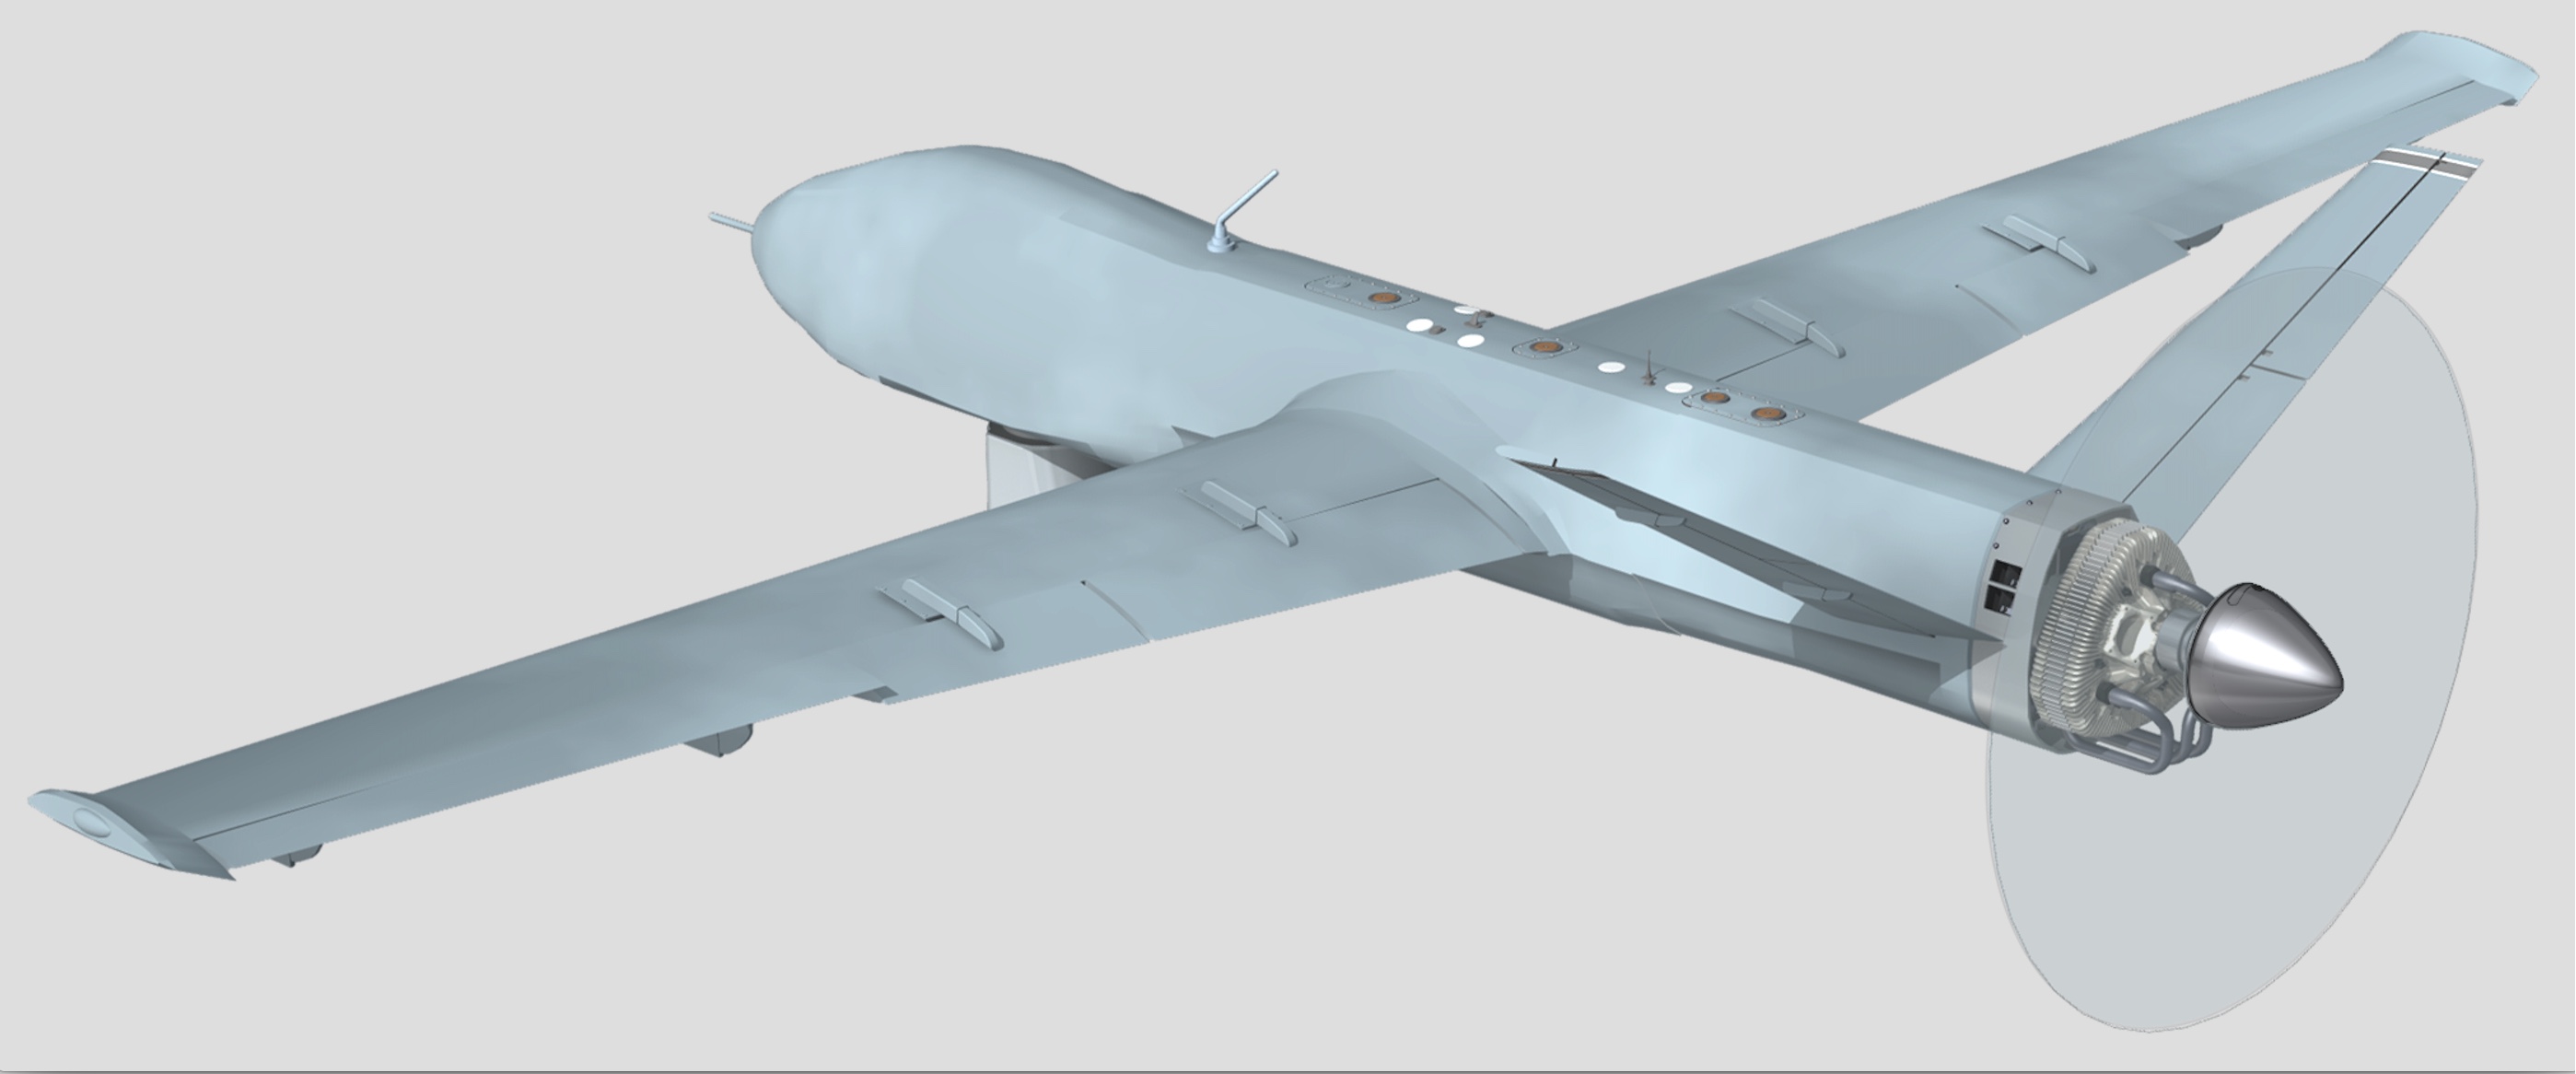 UAV powered by LiquidPiston's rotary 'X' engine